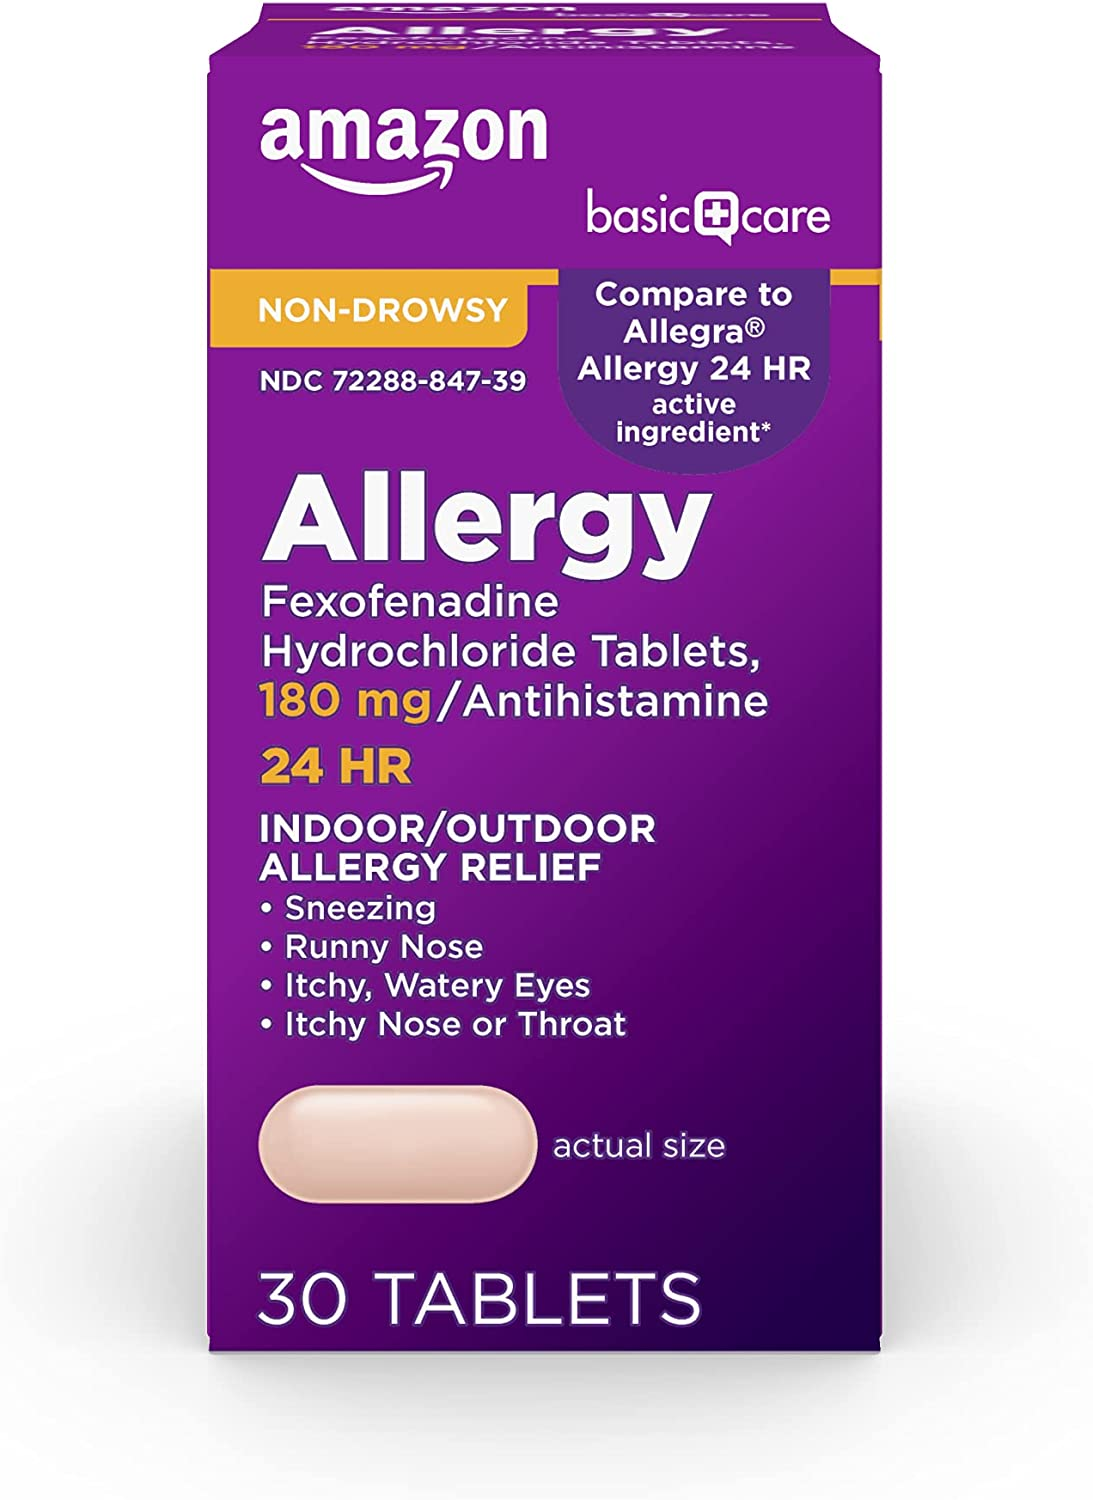 Amazon.com: Amazon Basic Care Fexofenadine Hydrochloride Tablets, 180 mg, 30 Count : Health & Household $6.94